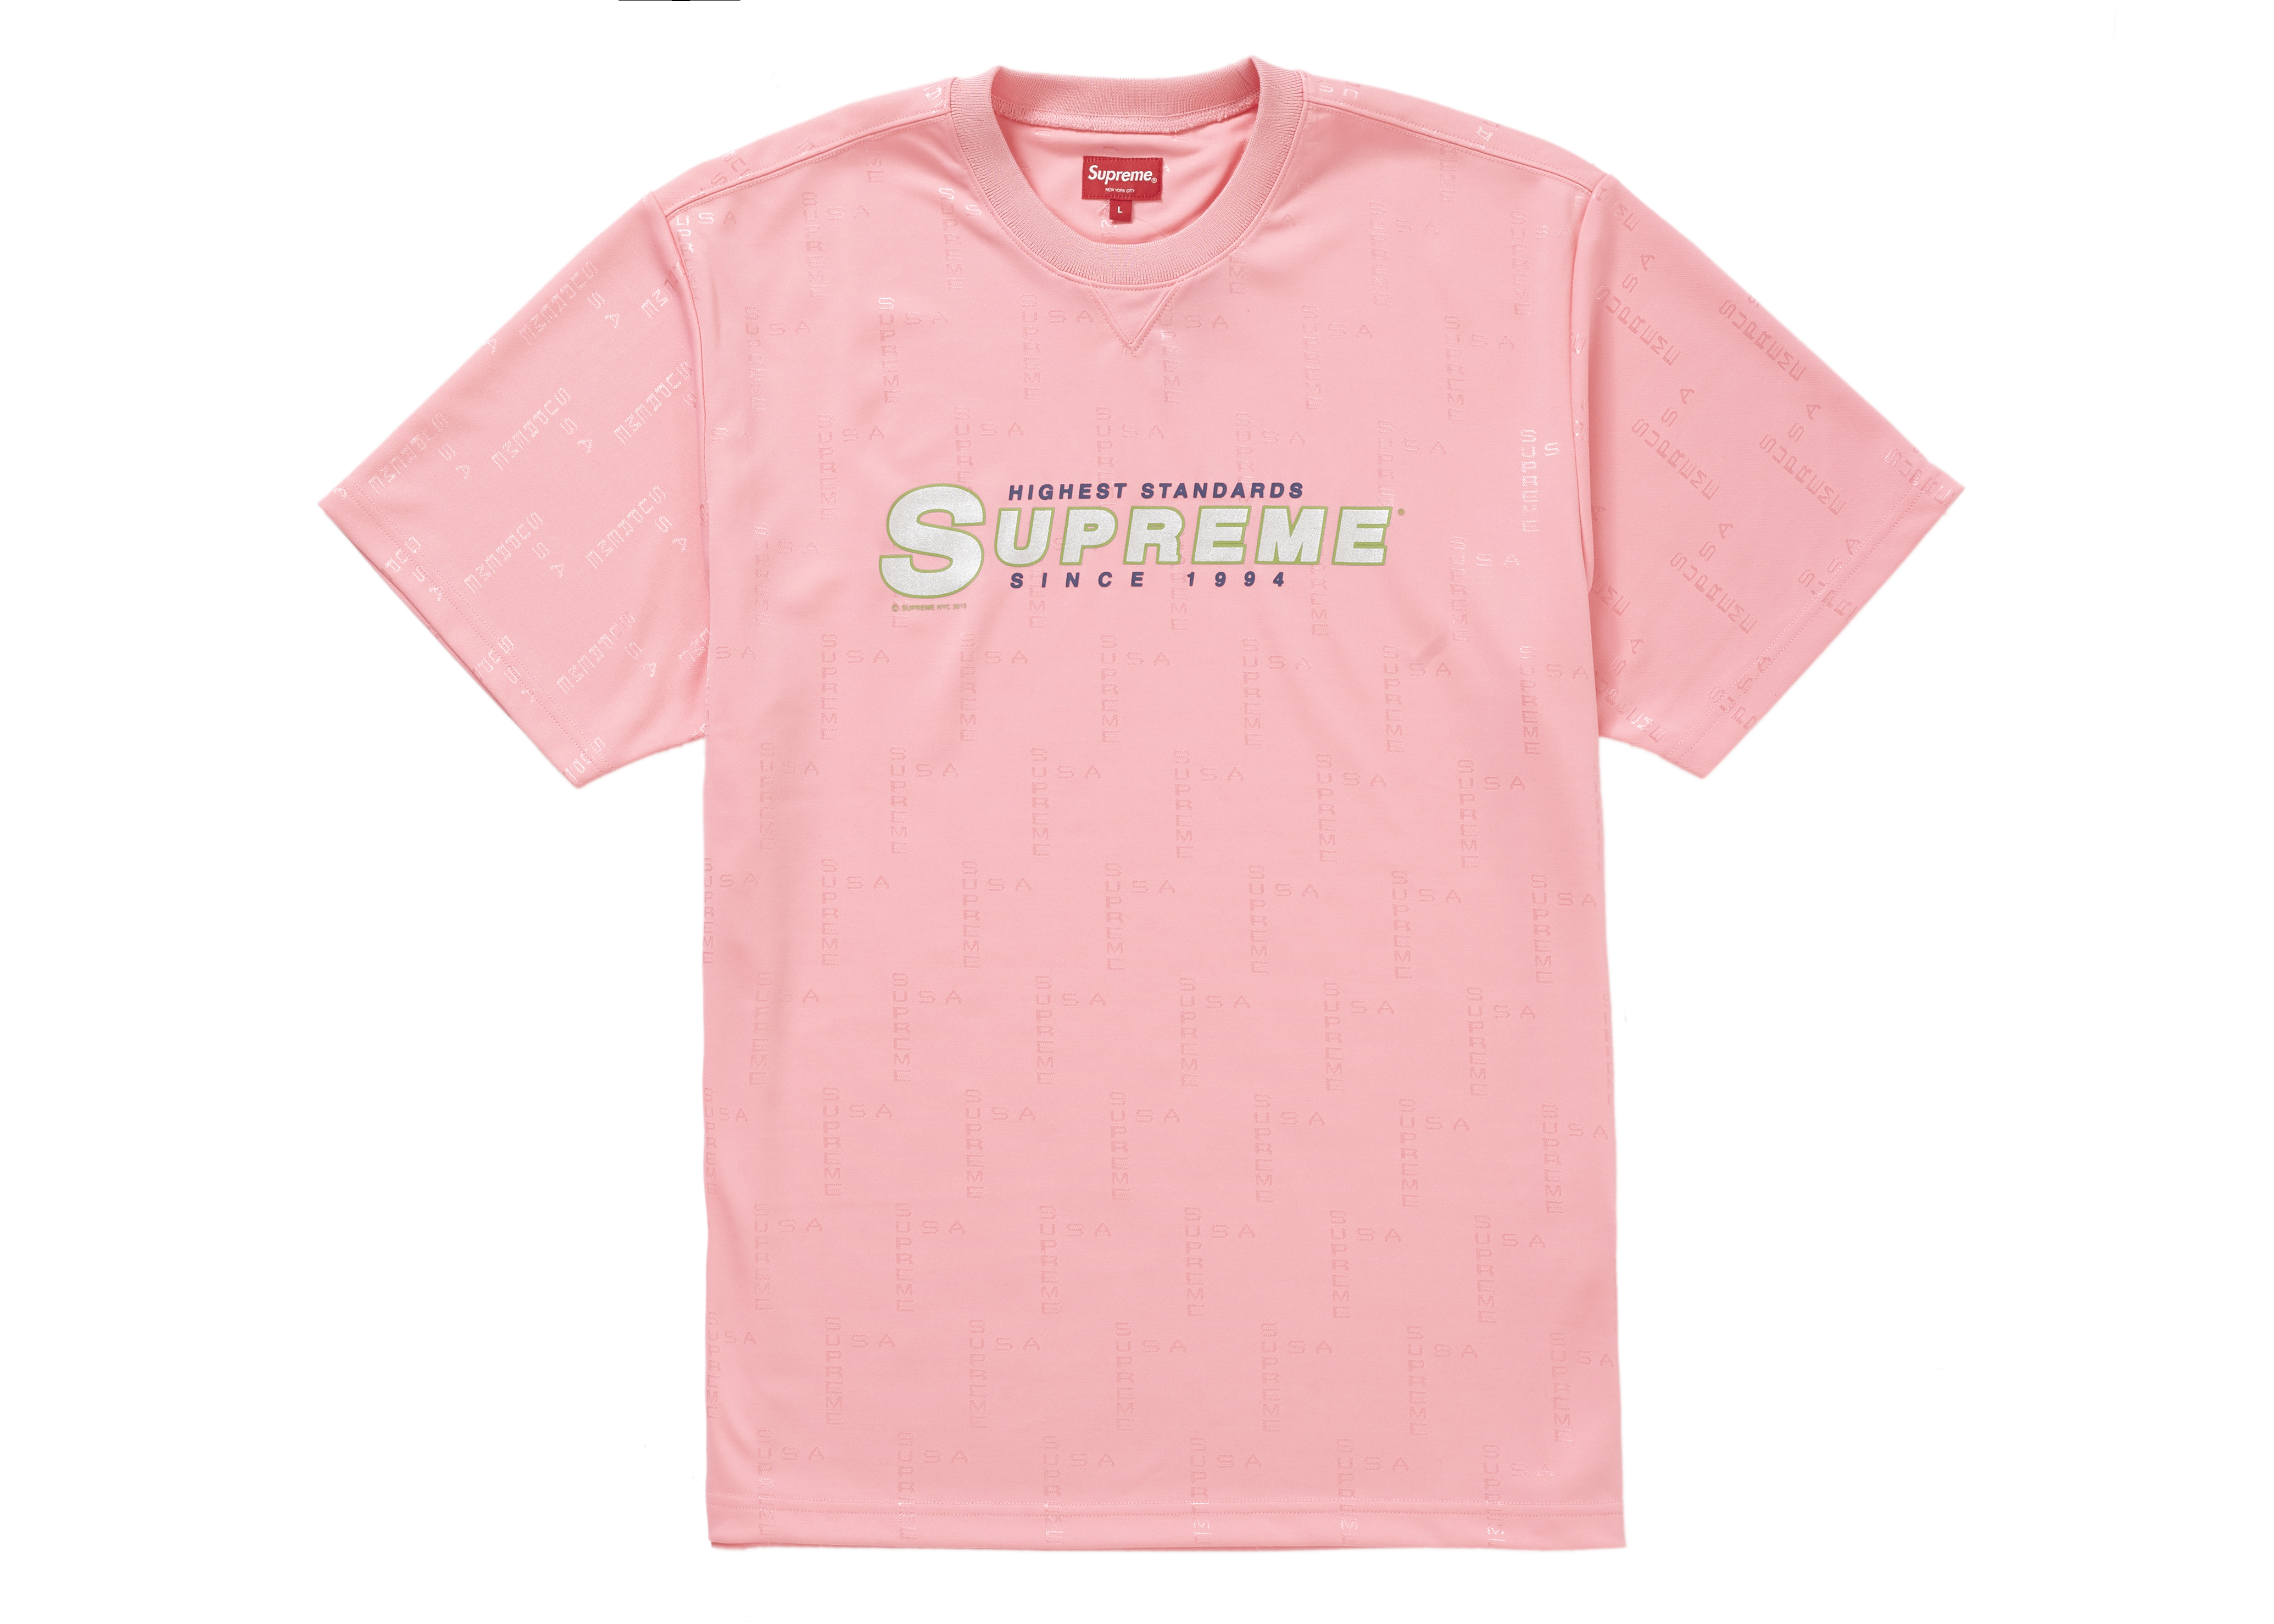 Supreme Highest Standards Athletic S/S Top Pink Men's - SS19 - US